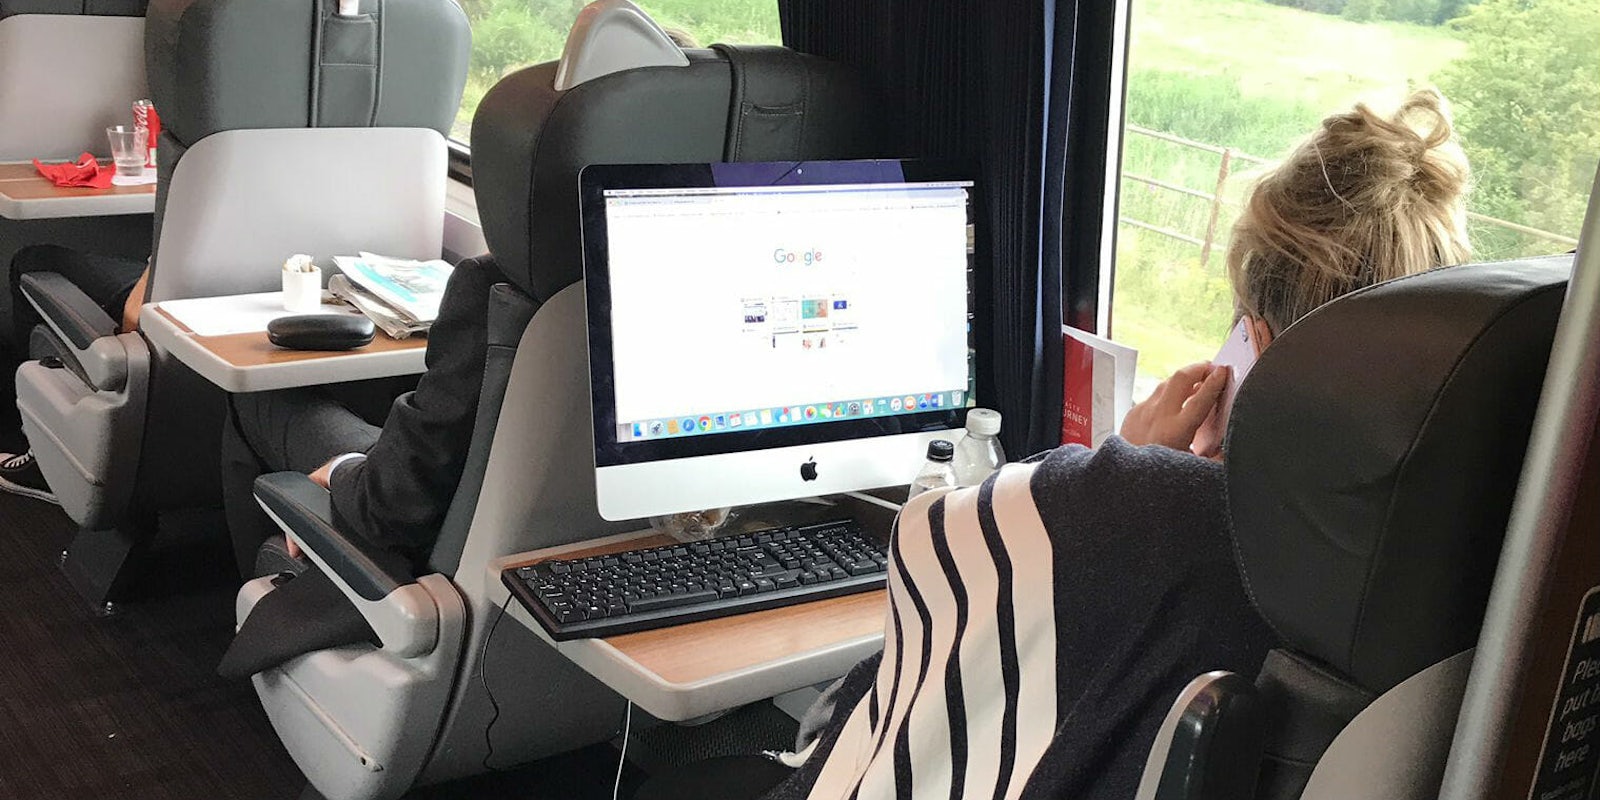 woman brings imac desktop on train